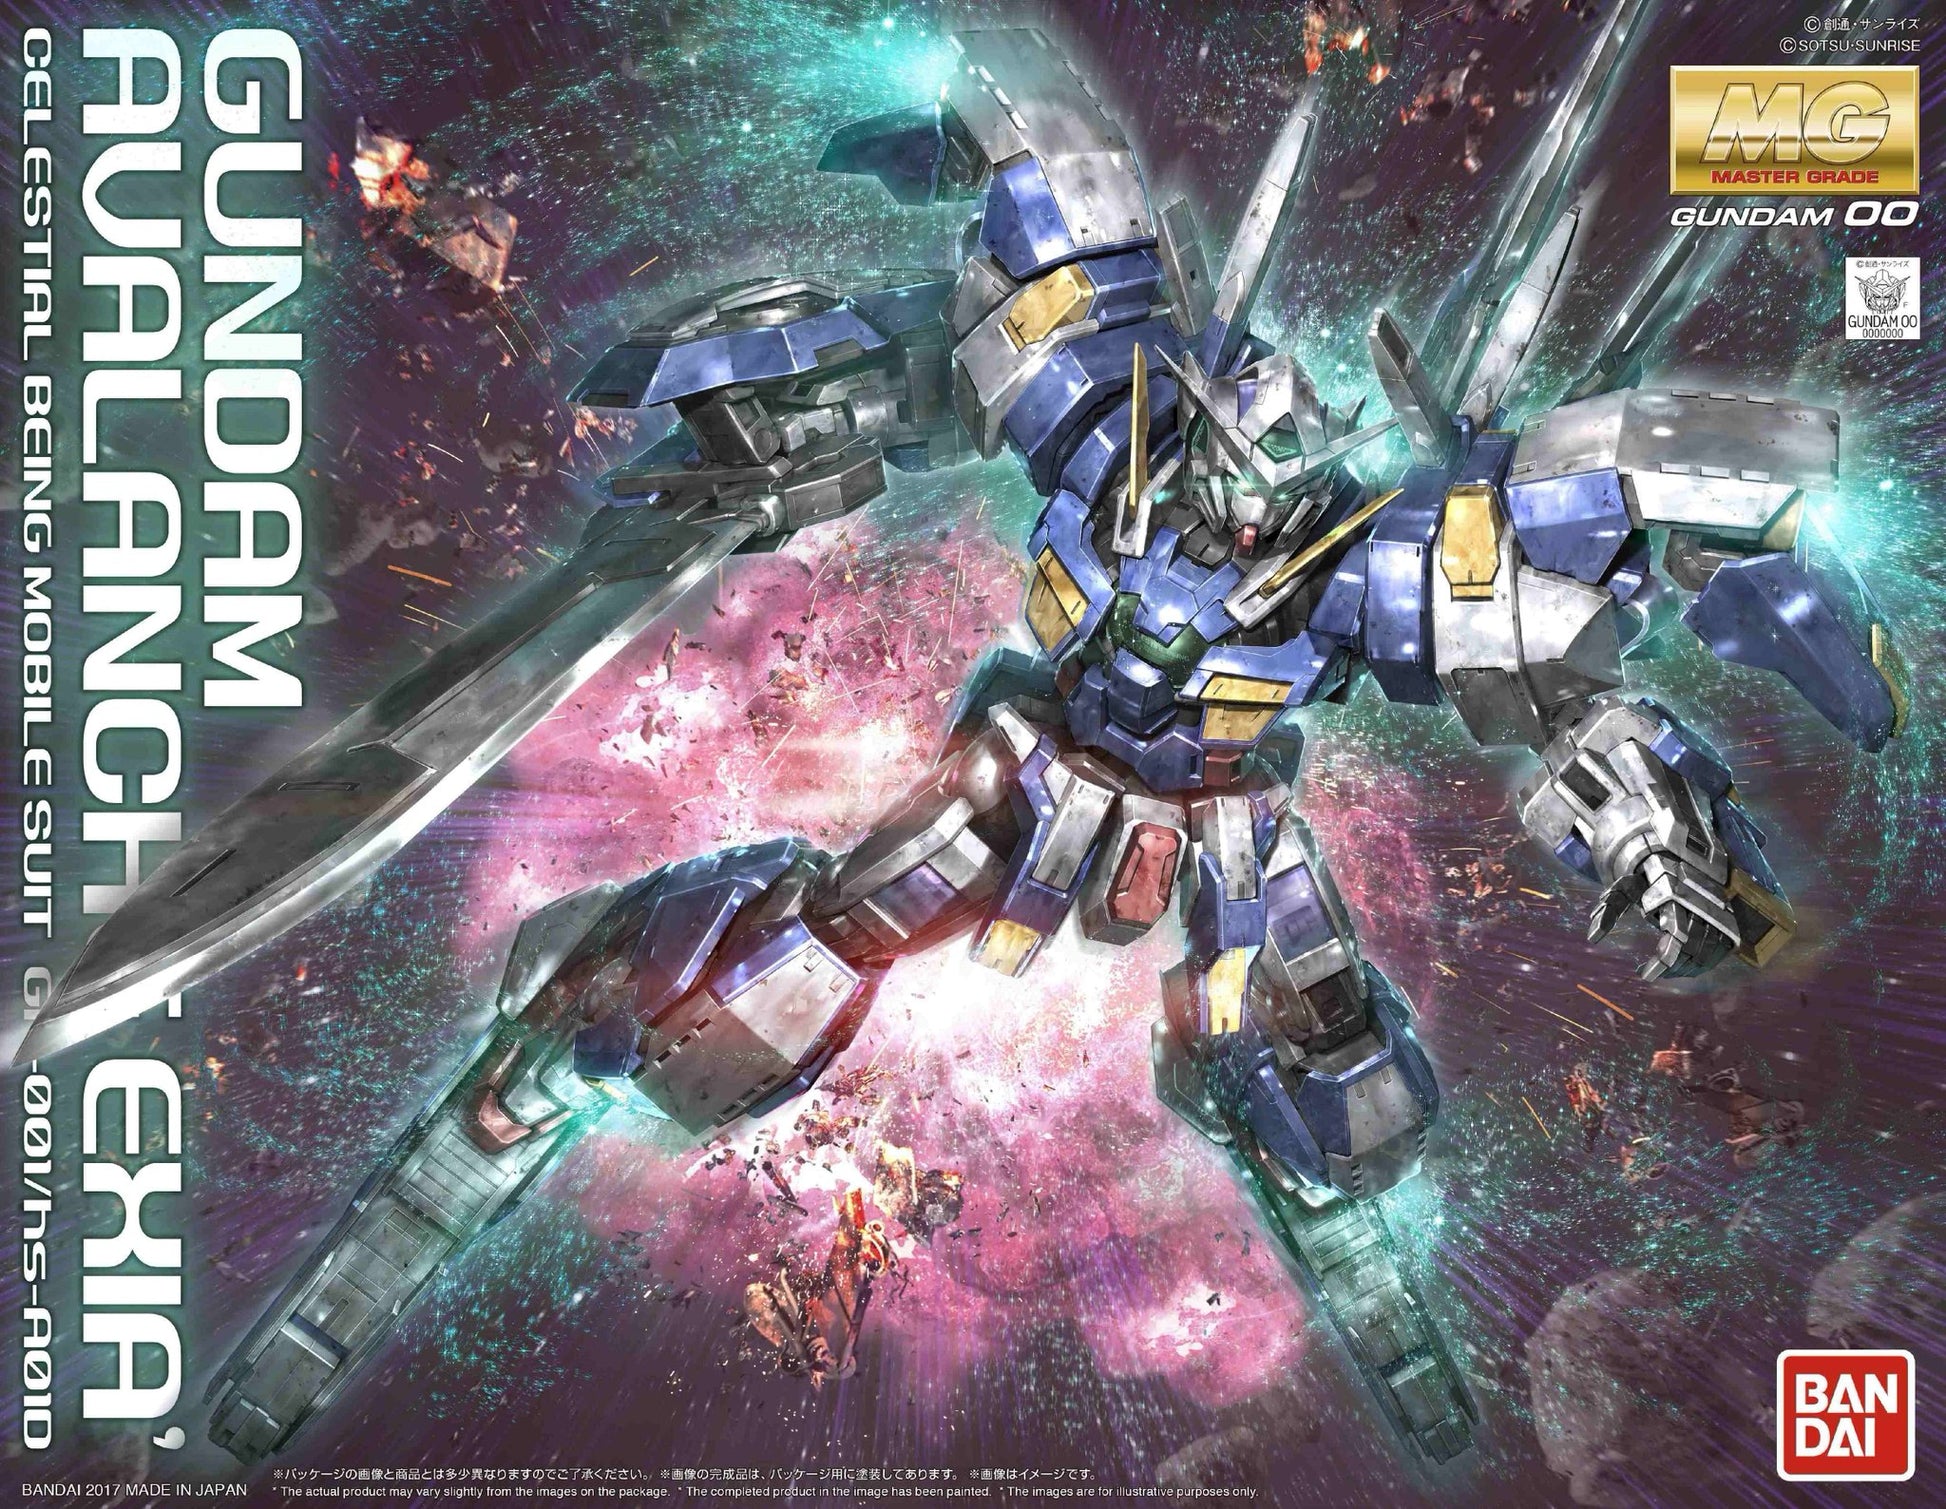 MG 1/100 Gundam Avalanche Exia - Glacier Hobbies - Bandai